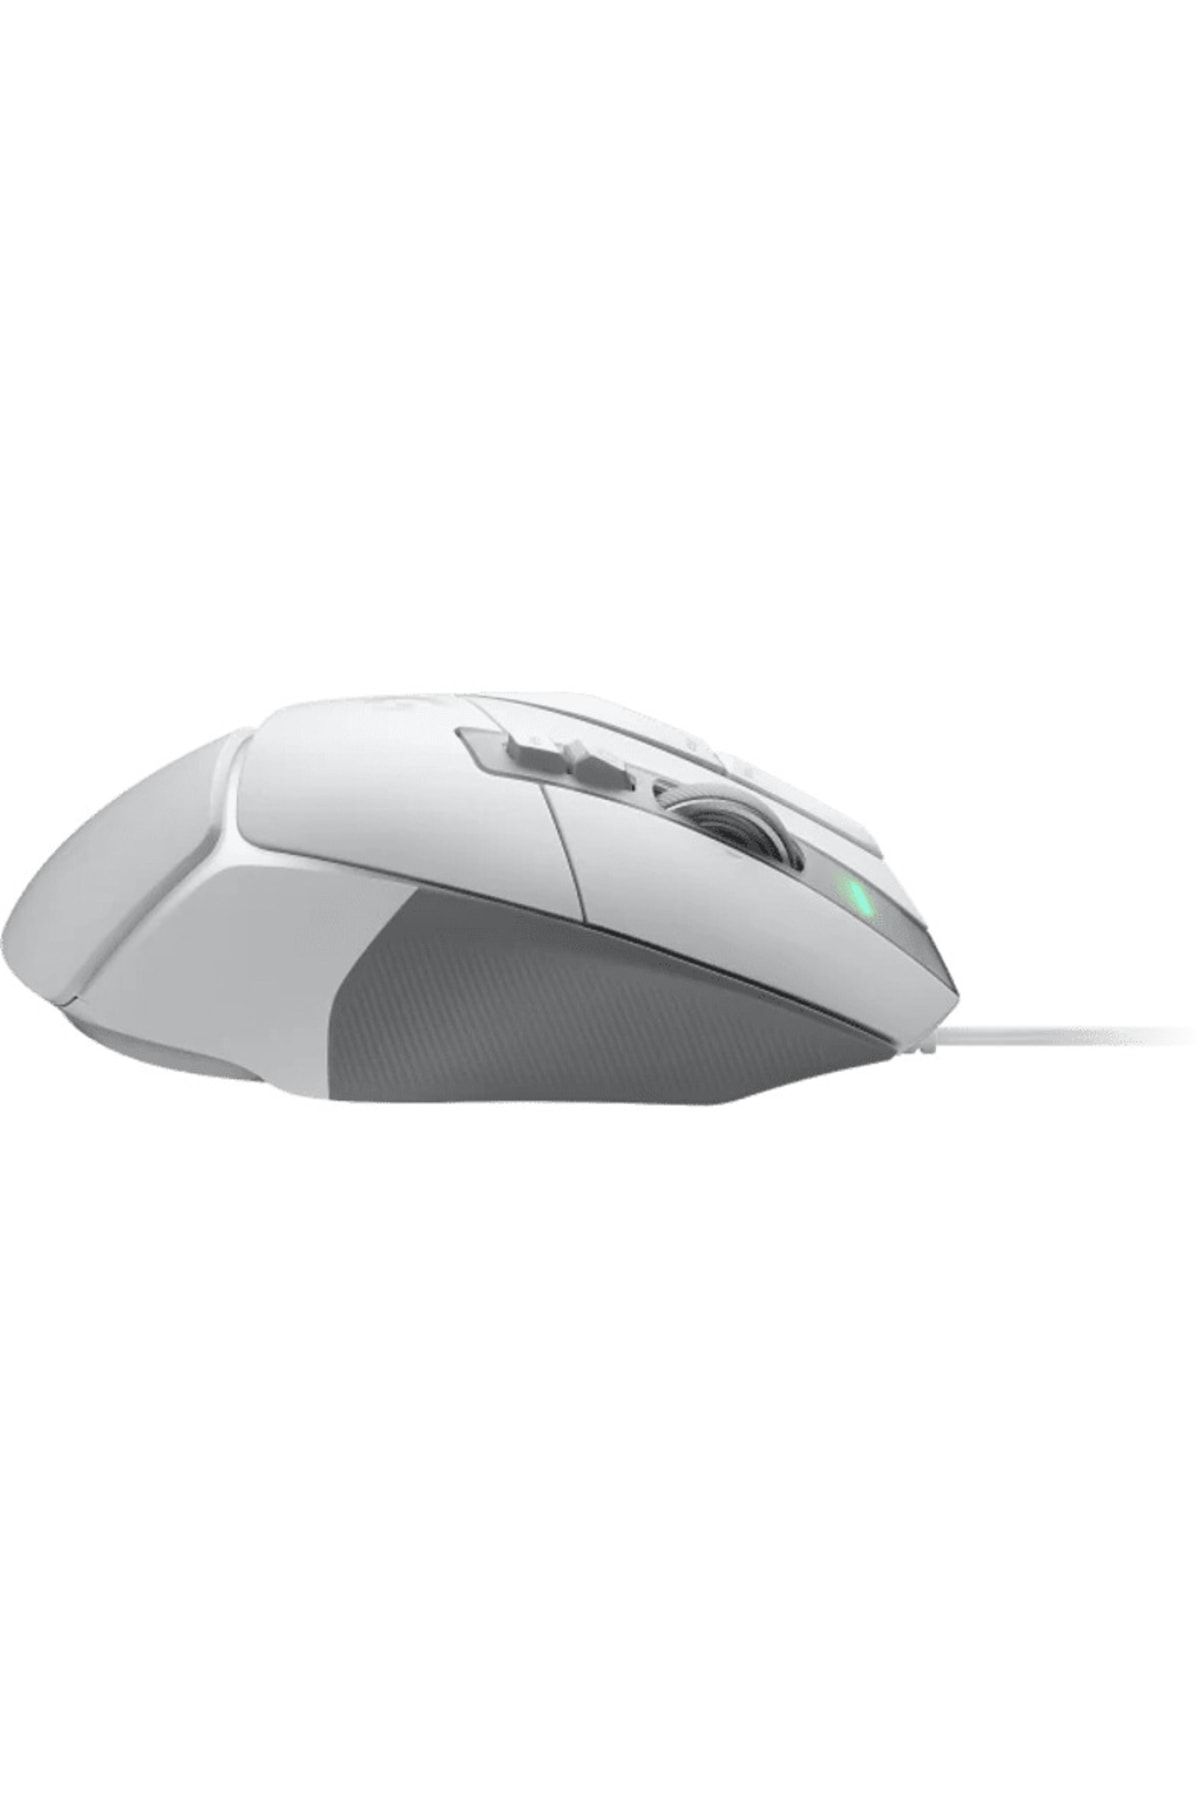 logitech G G502 X Kablolu Oyuncu Mouse Beyaz